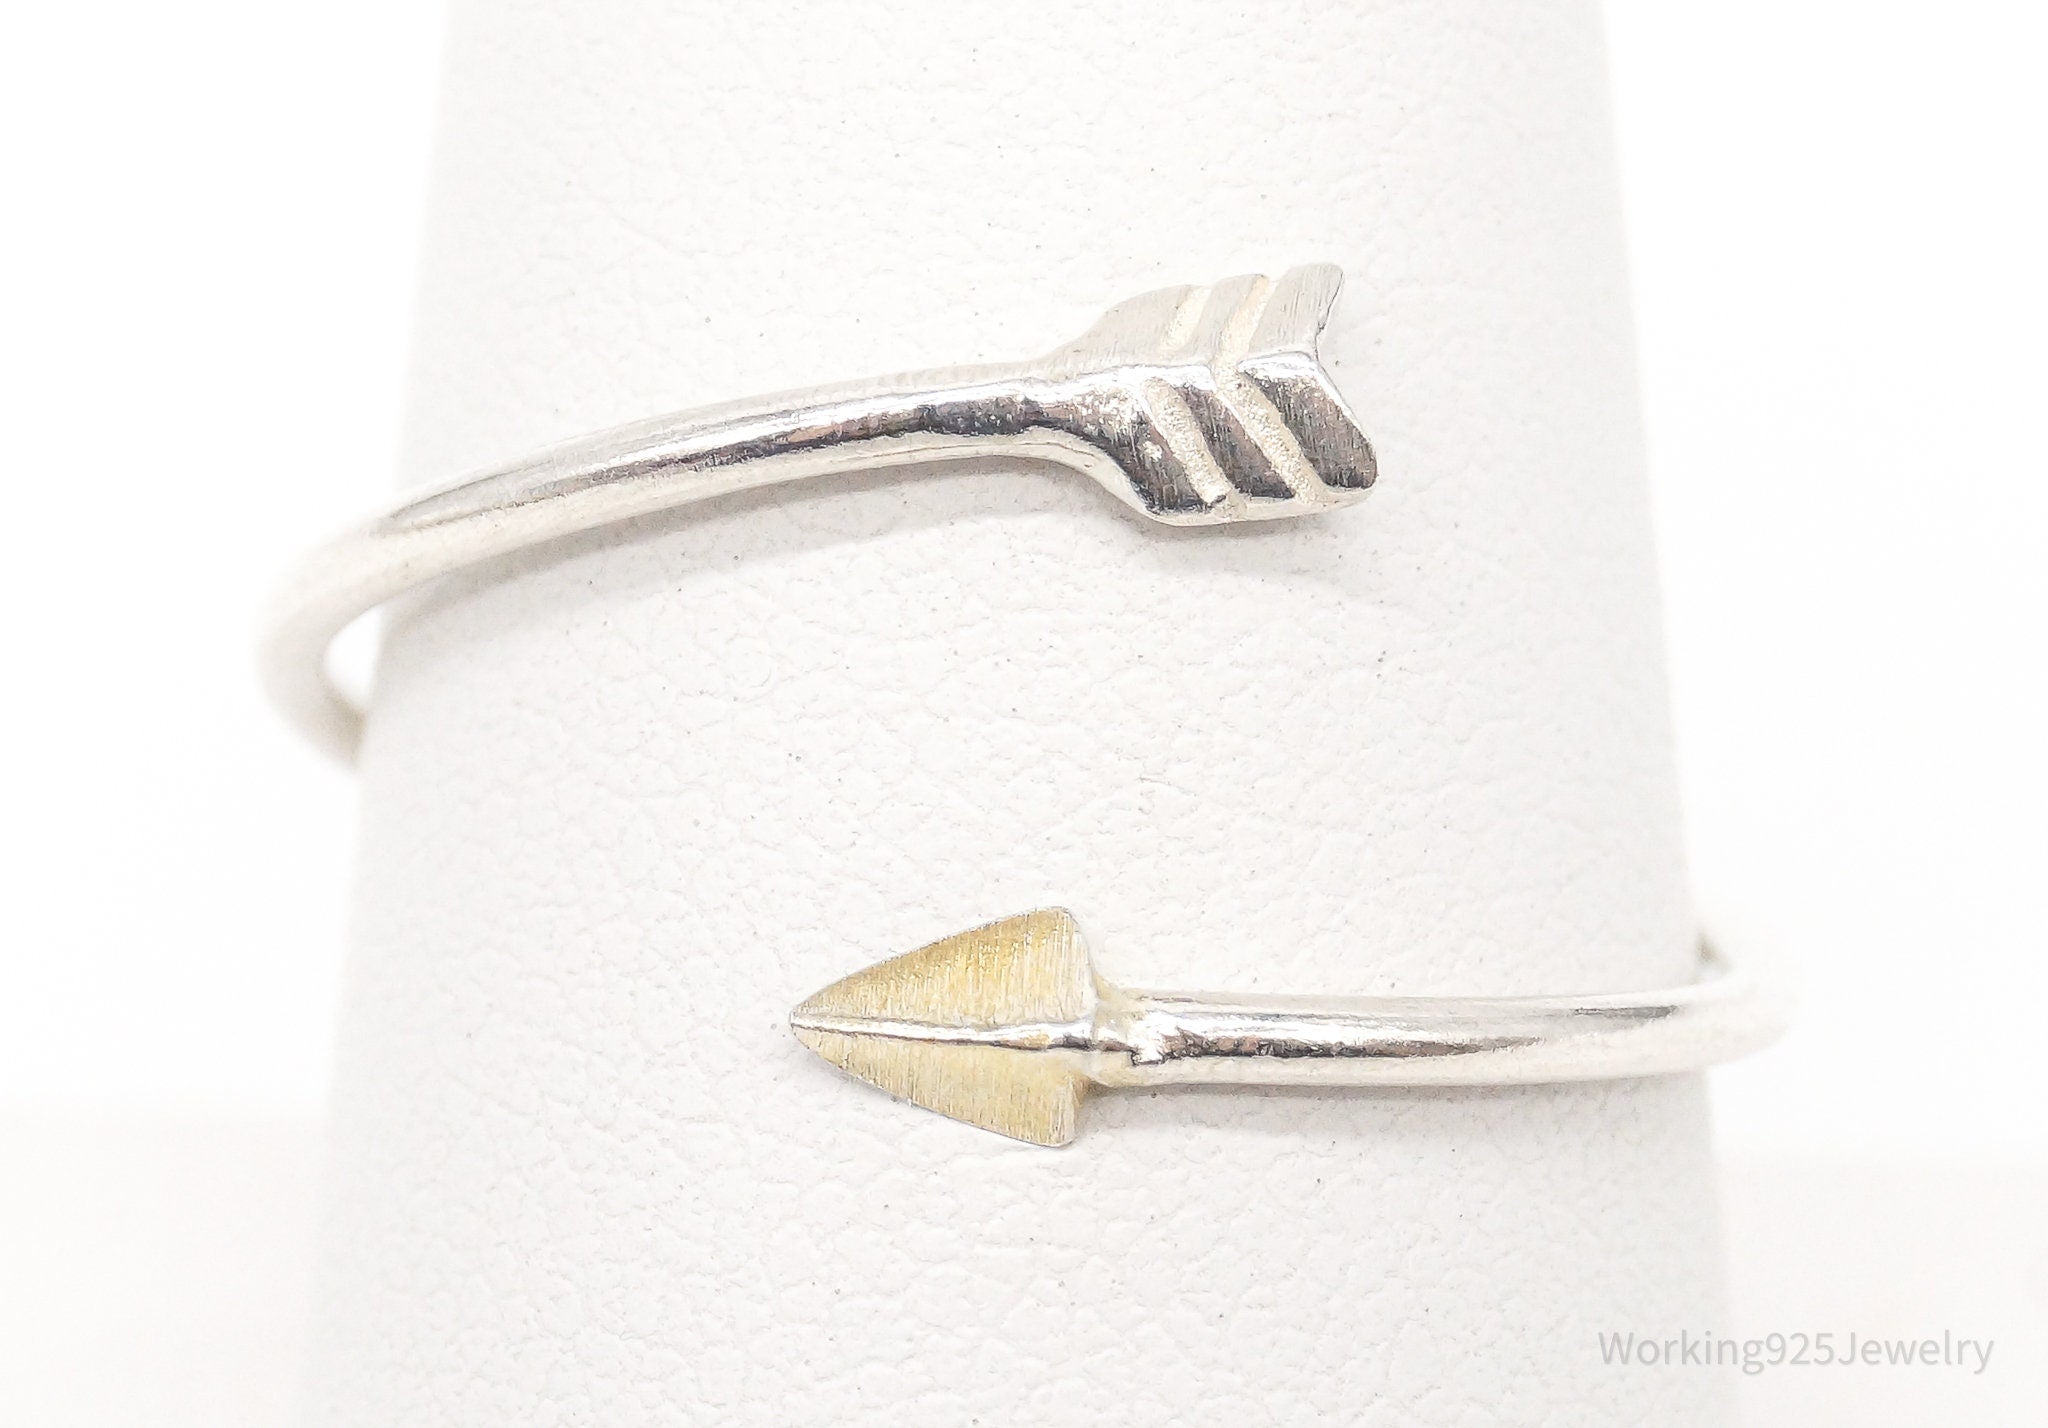 Vintage Arrow Gold Vermeil Sterling Silver Wrap Ring - Size 8.75 Adjustable